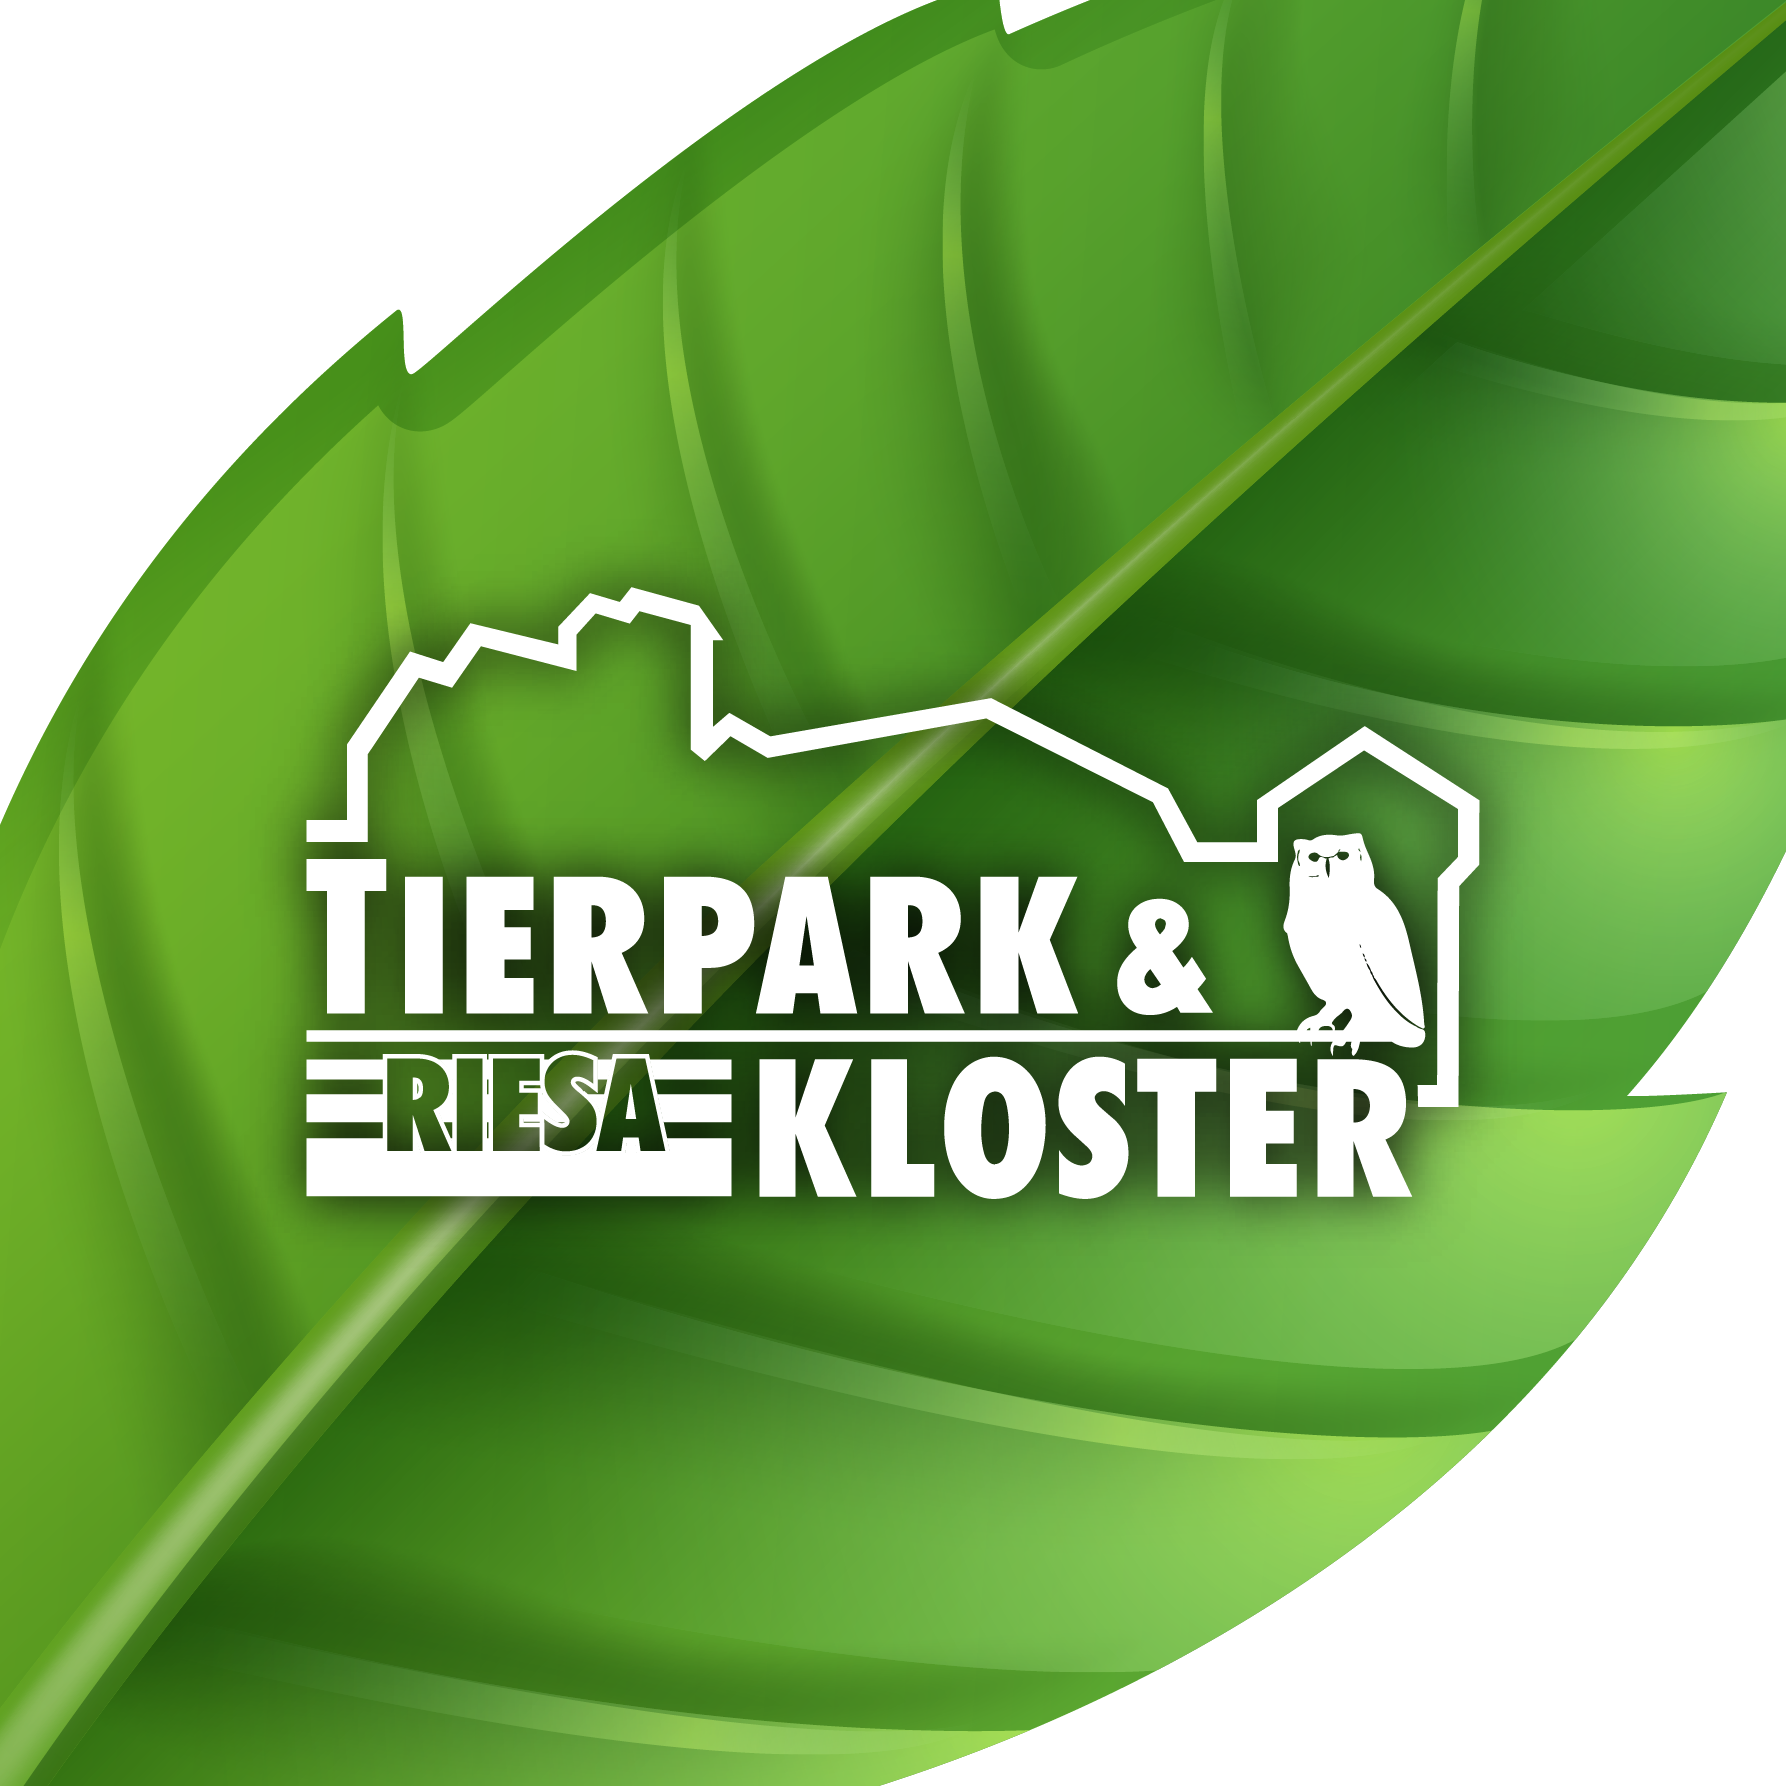 Tierpark & Kloster Riesa, FVG Riesa mbH Janina Kraemer